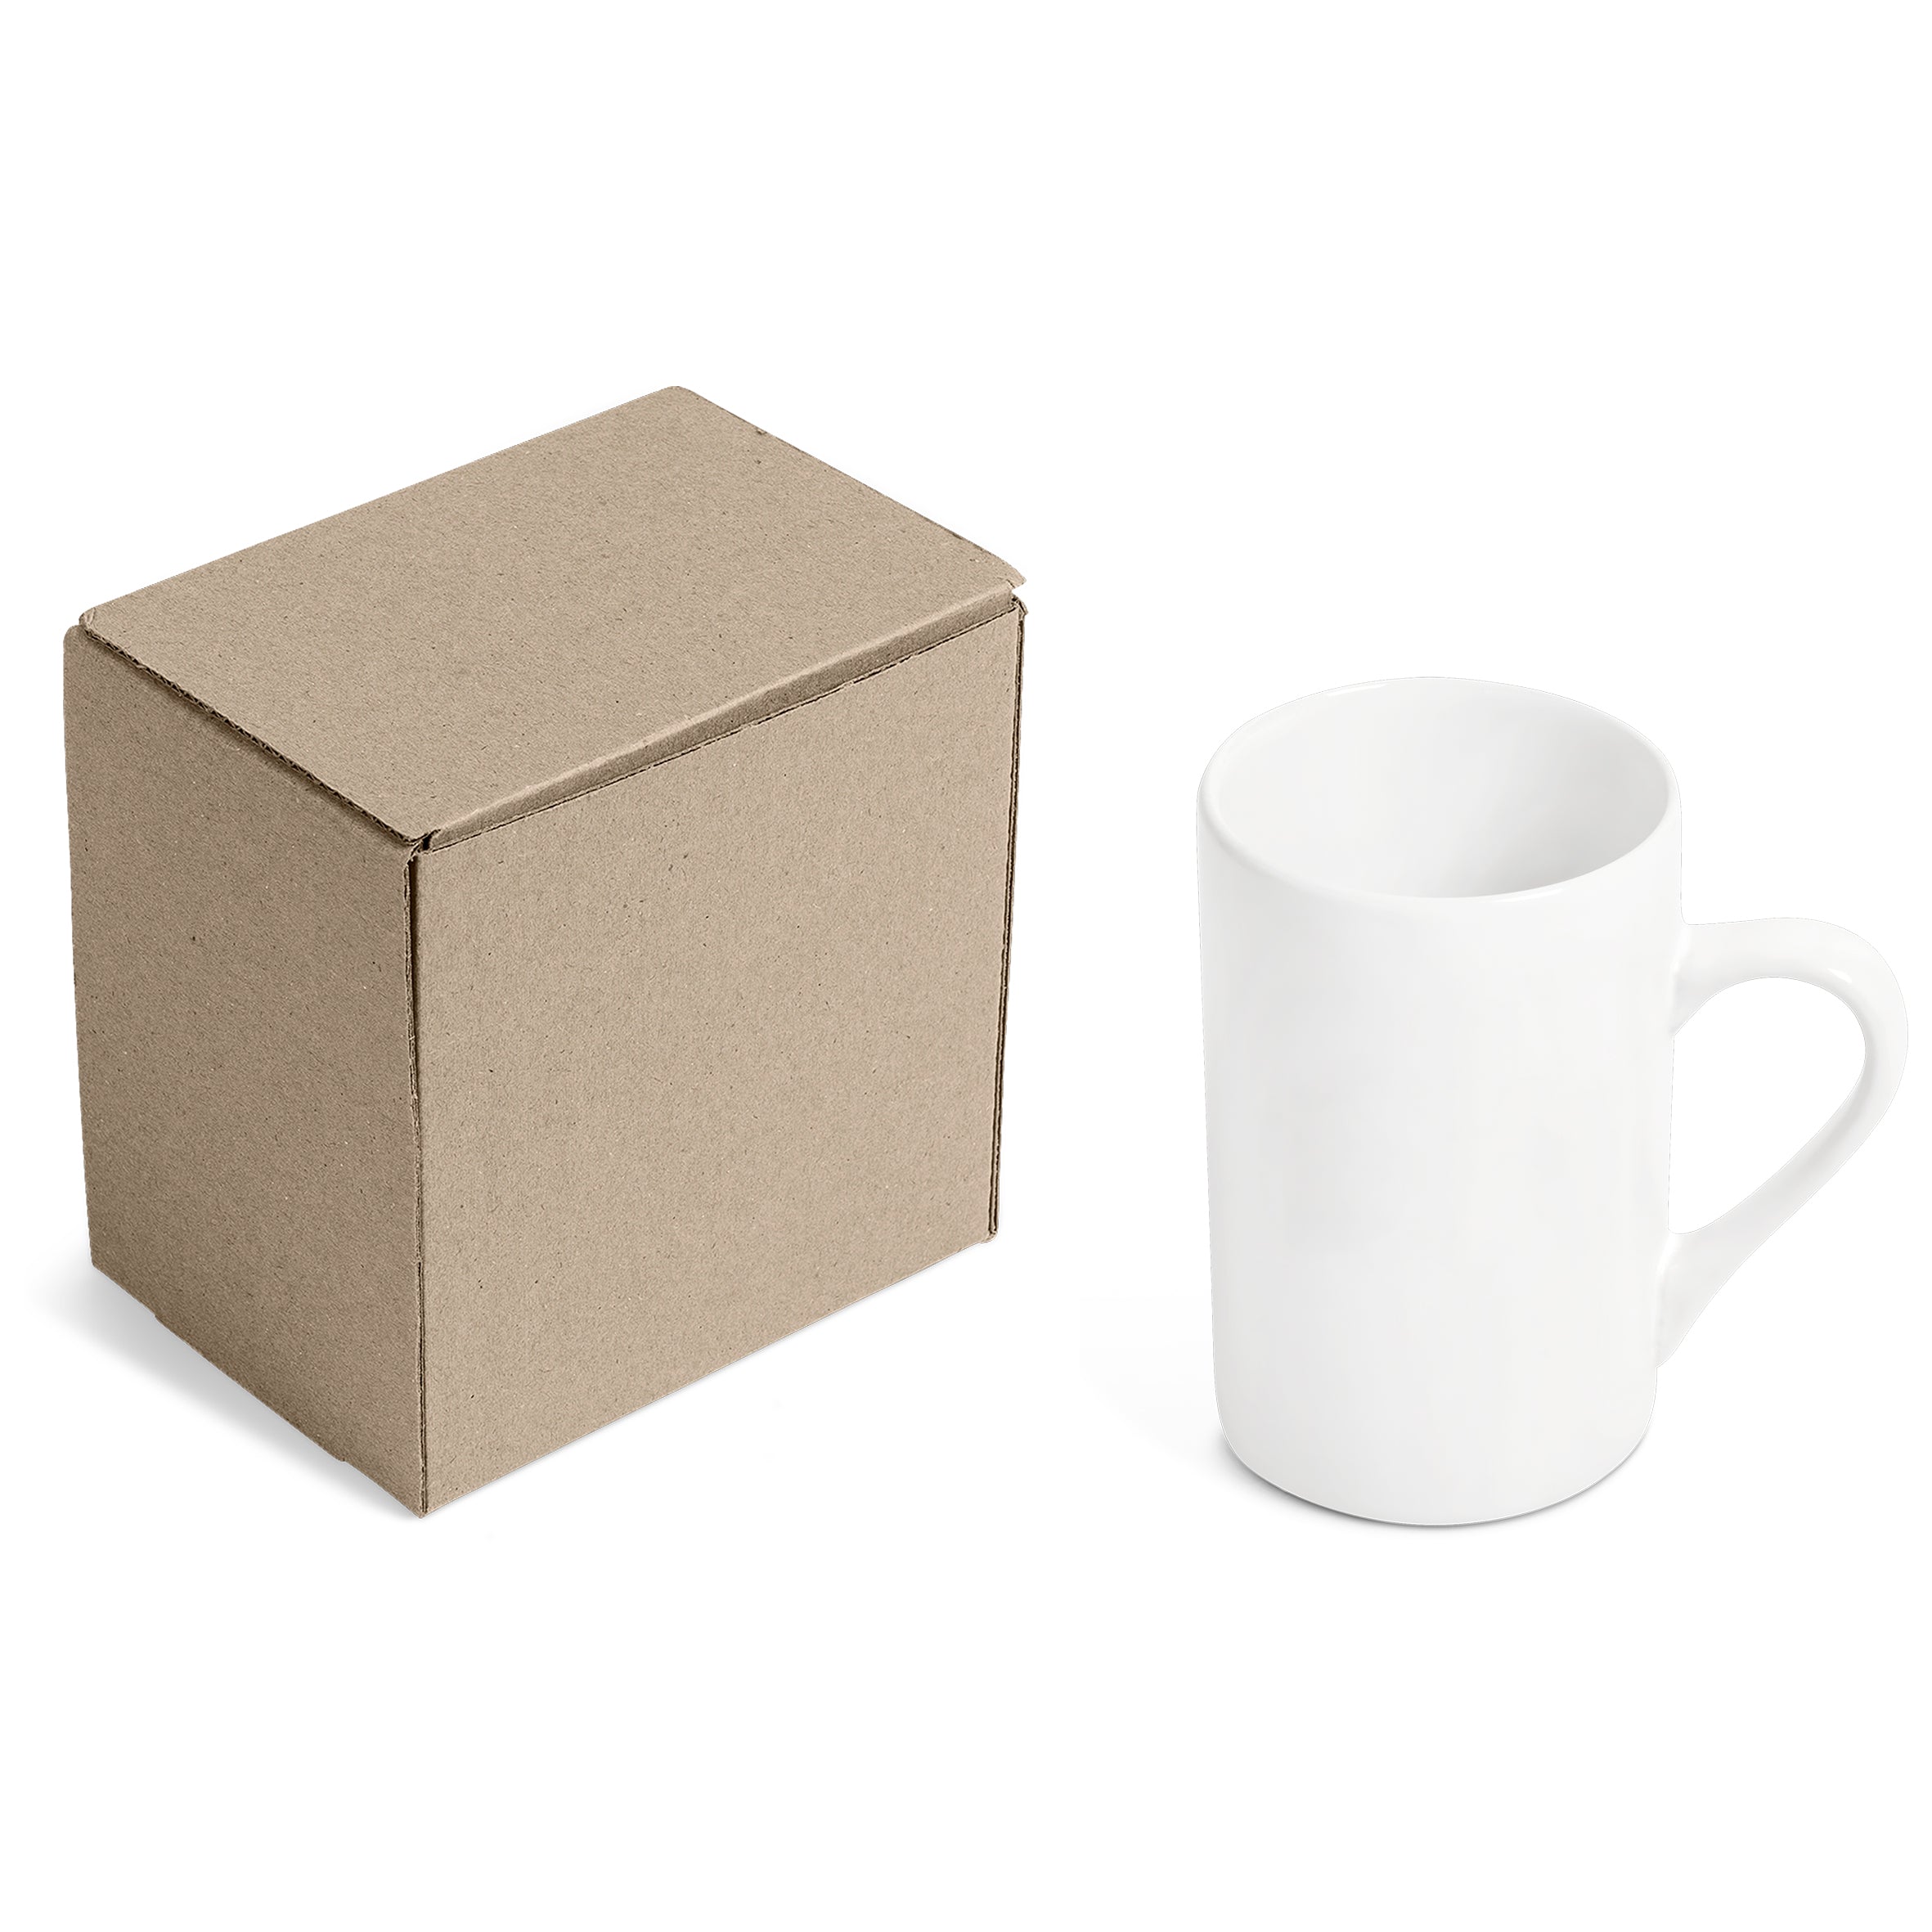 Blanco Mug in Bianca Custom Gift Box